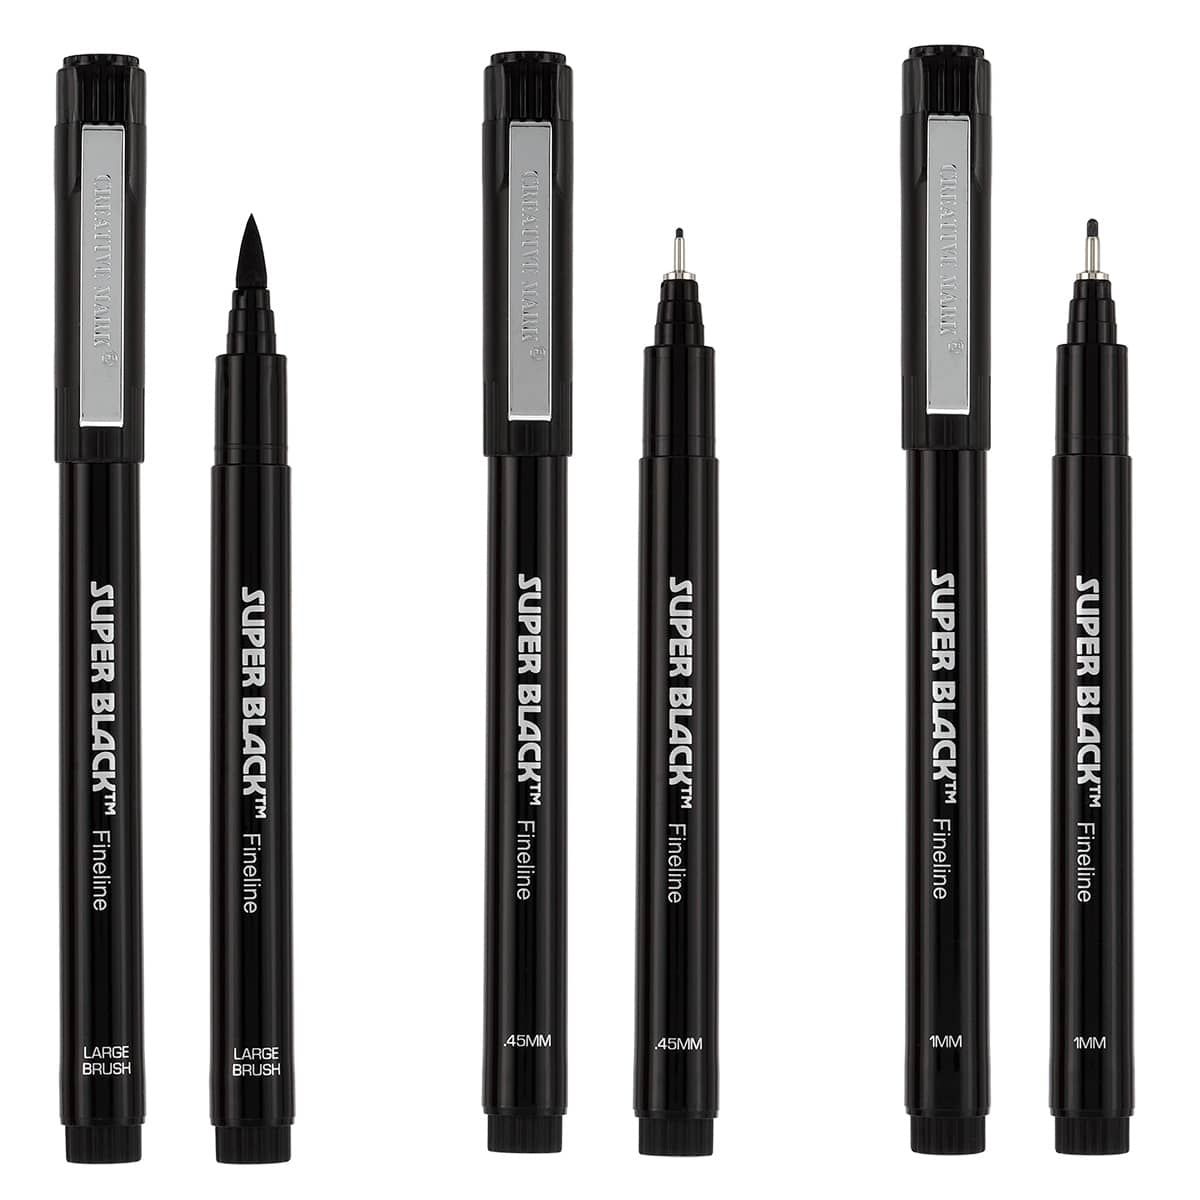  Super Black Permanent Fineliner Drawing Pens